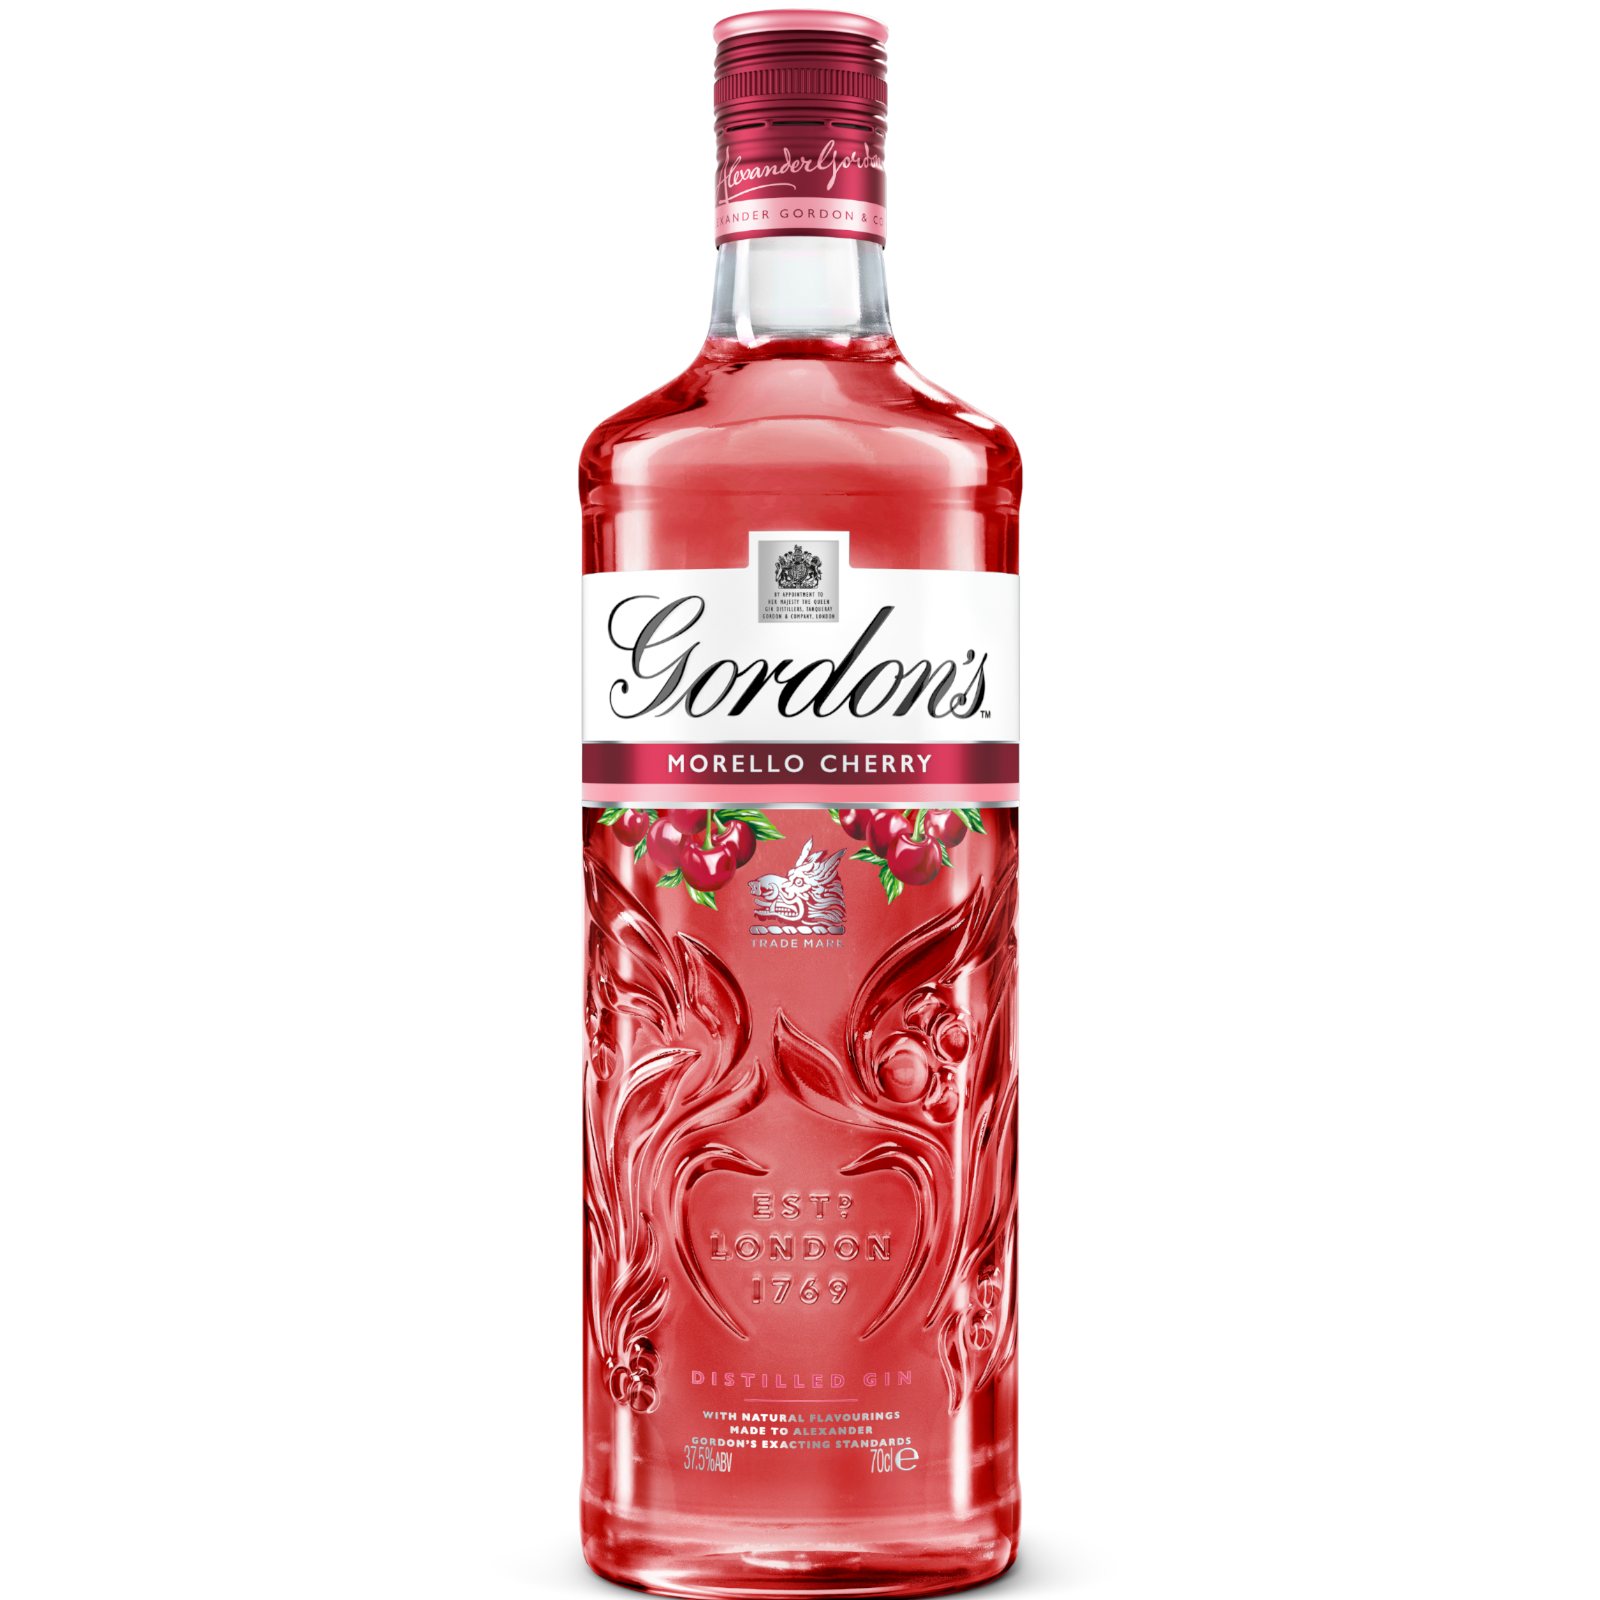 Gordon's Gin (UK 37.5%)